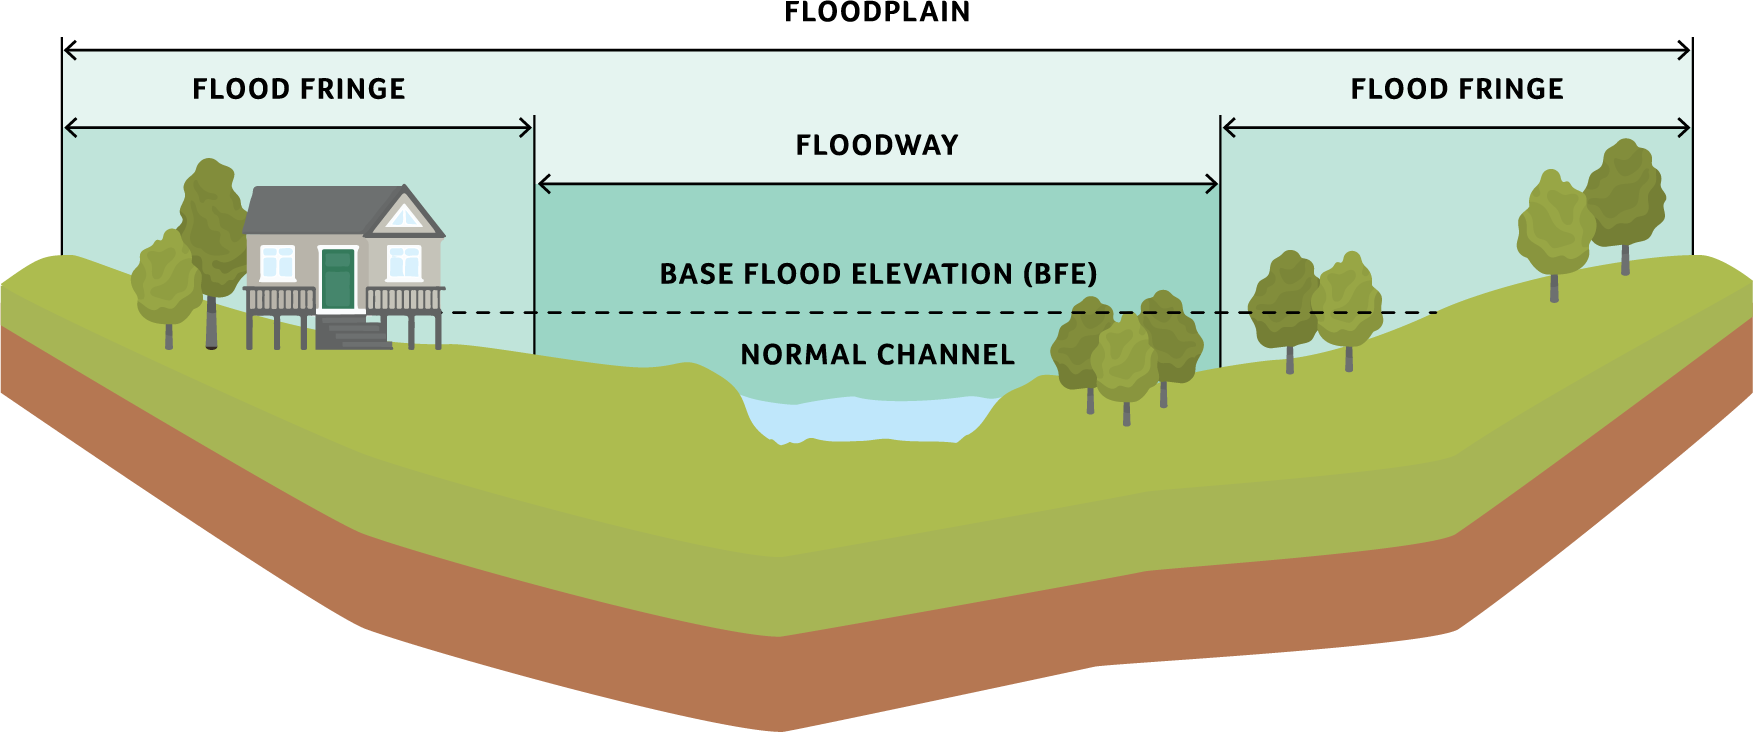 Illustration of a floodplain